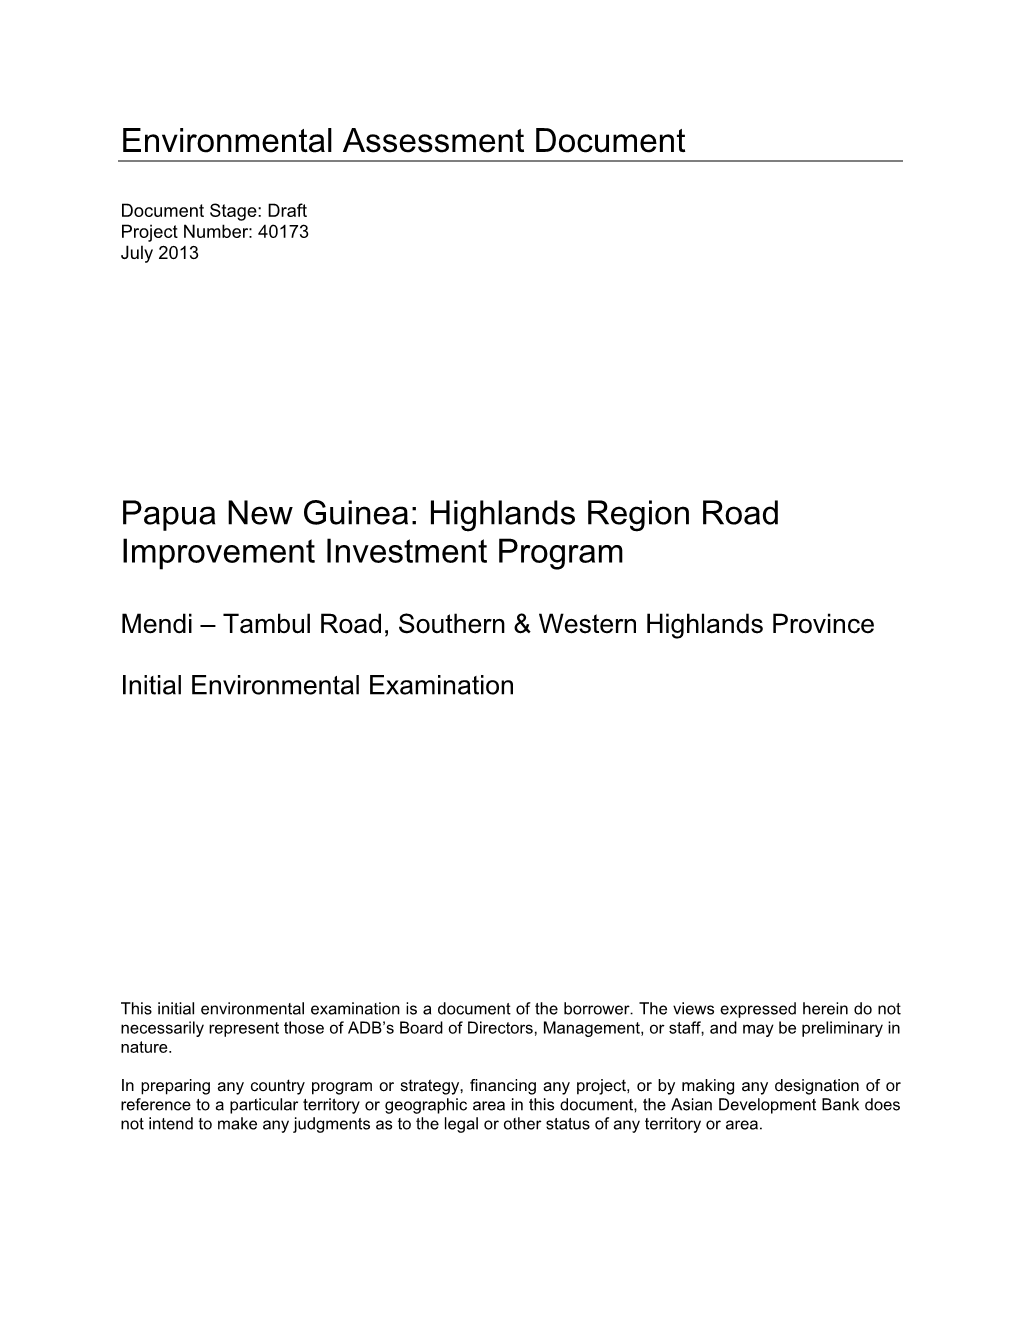 40173-043: Highlands Region Road Improvement Investment